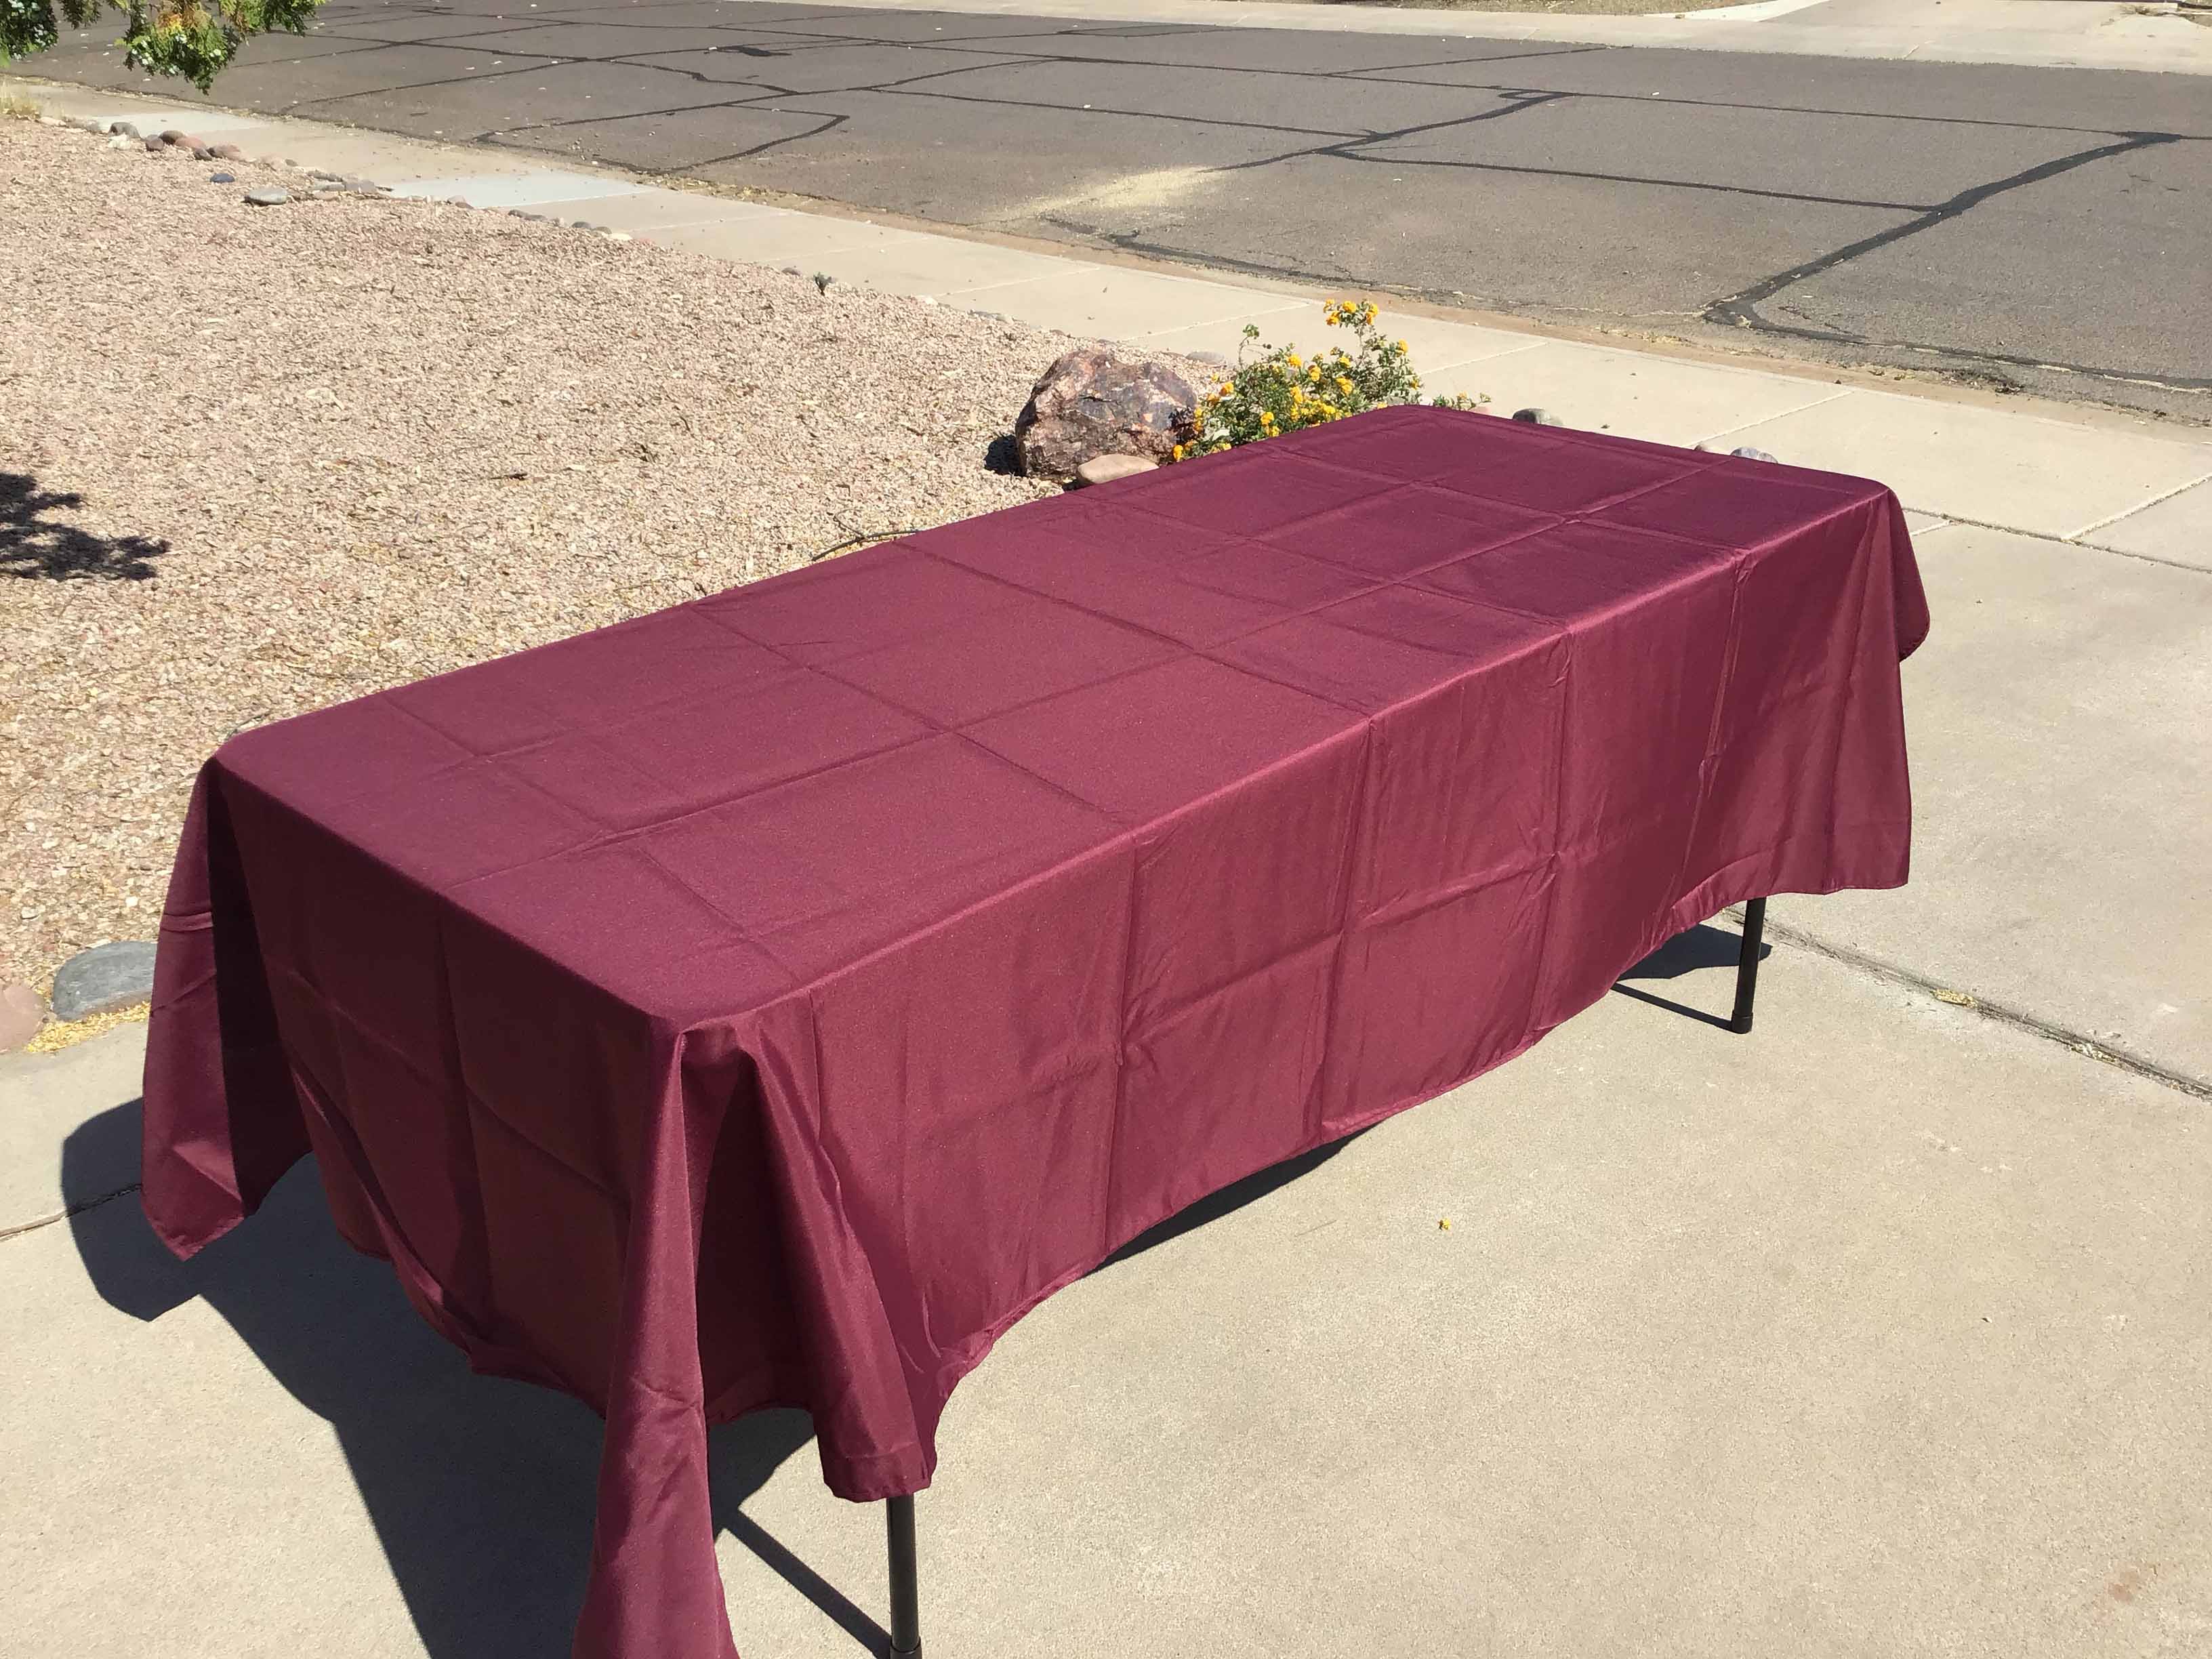 rectangle tablecloths (burgundy) - 60 x 102